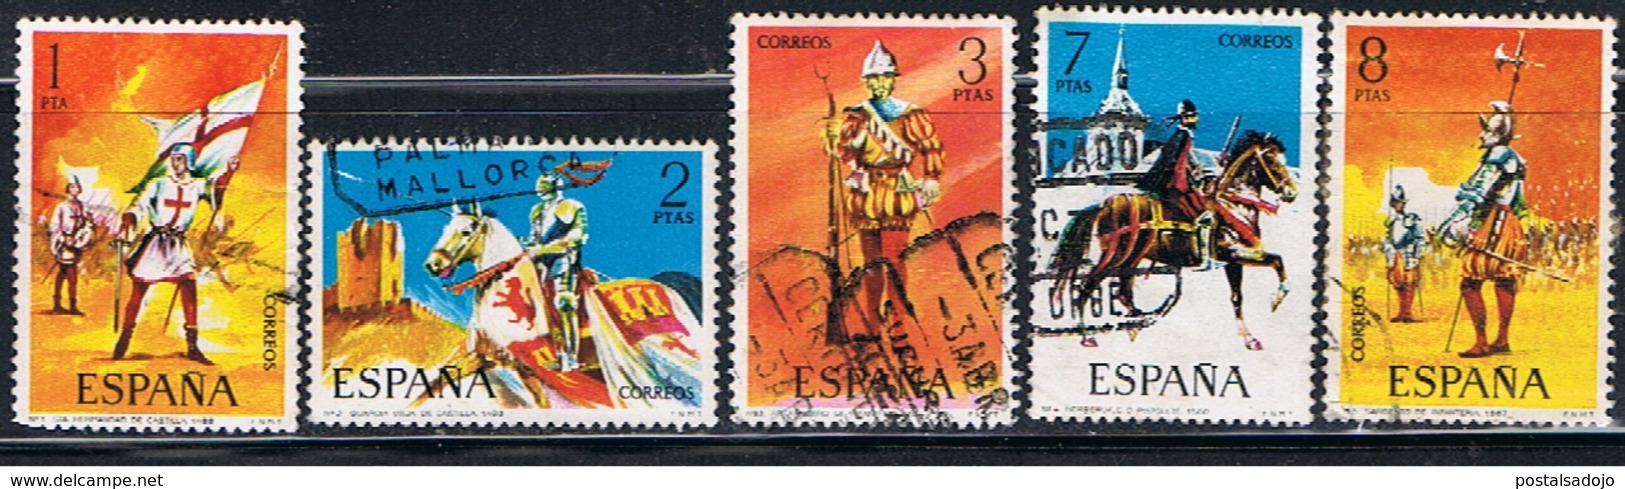 (2E 459) ESPAÑA // YVERT 1793 à 1797  // EDIFIL  2139 à 2143 // 1973 - Usados